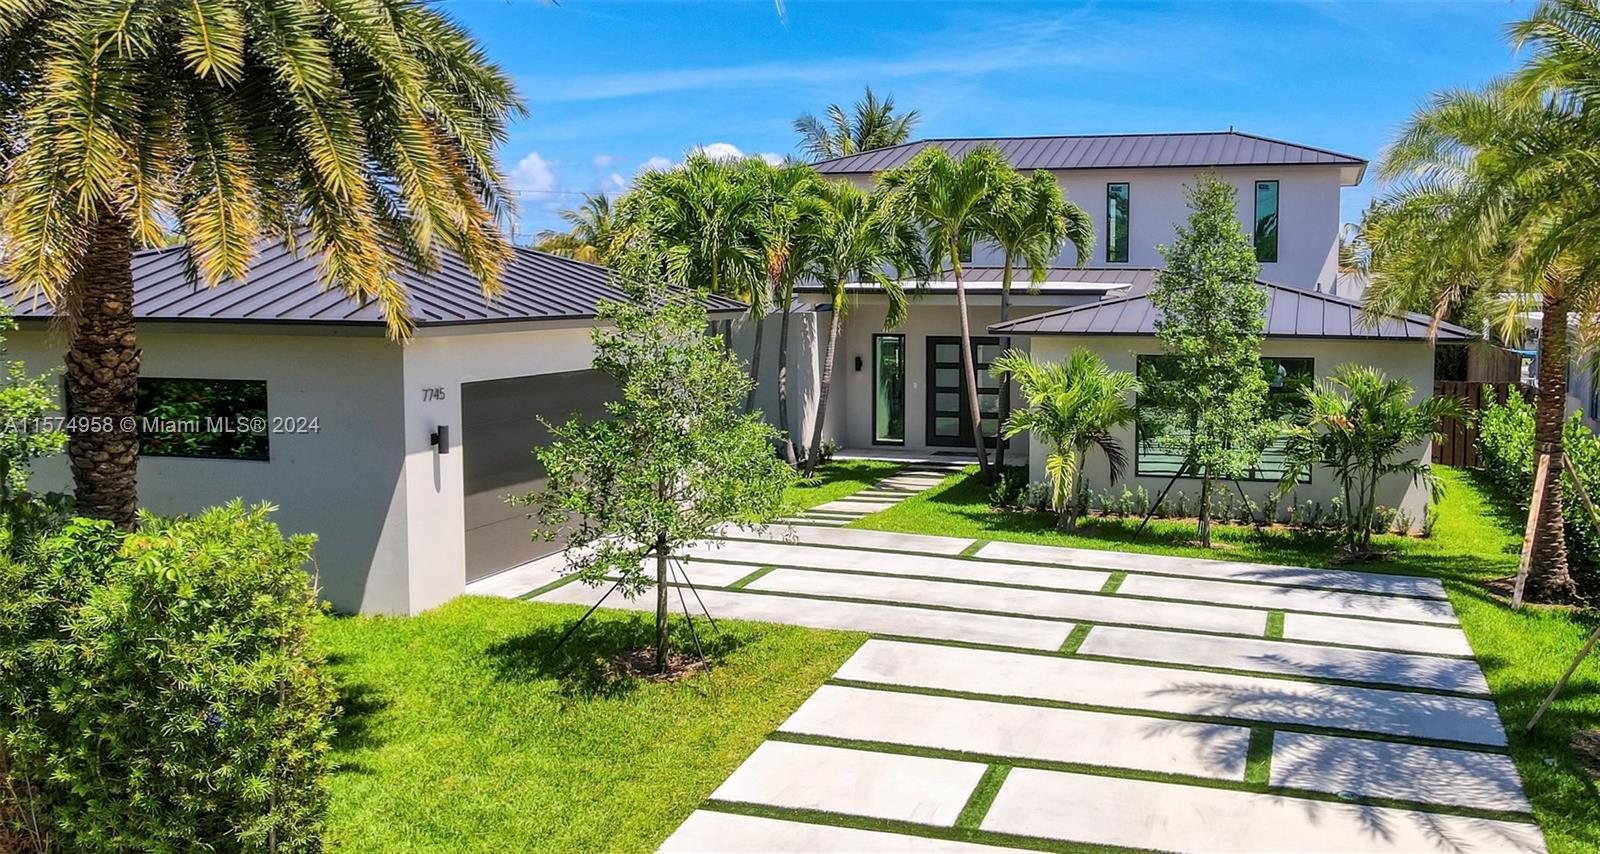 Rental Property at 7745 Noremac Ave, Miami Beach, Miami-Dade County, Florida - Bedrooms: 5 
Bathrooms: 5  - $25,000 MO.